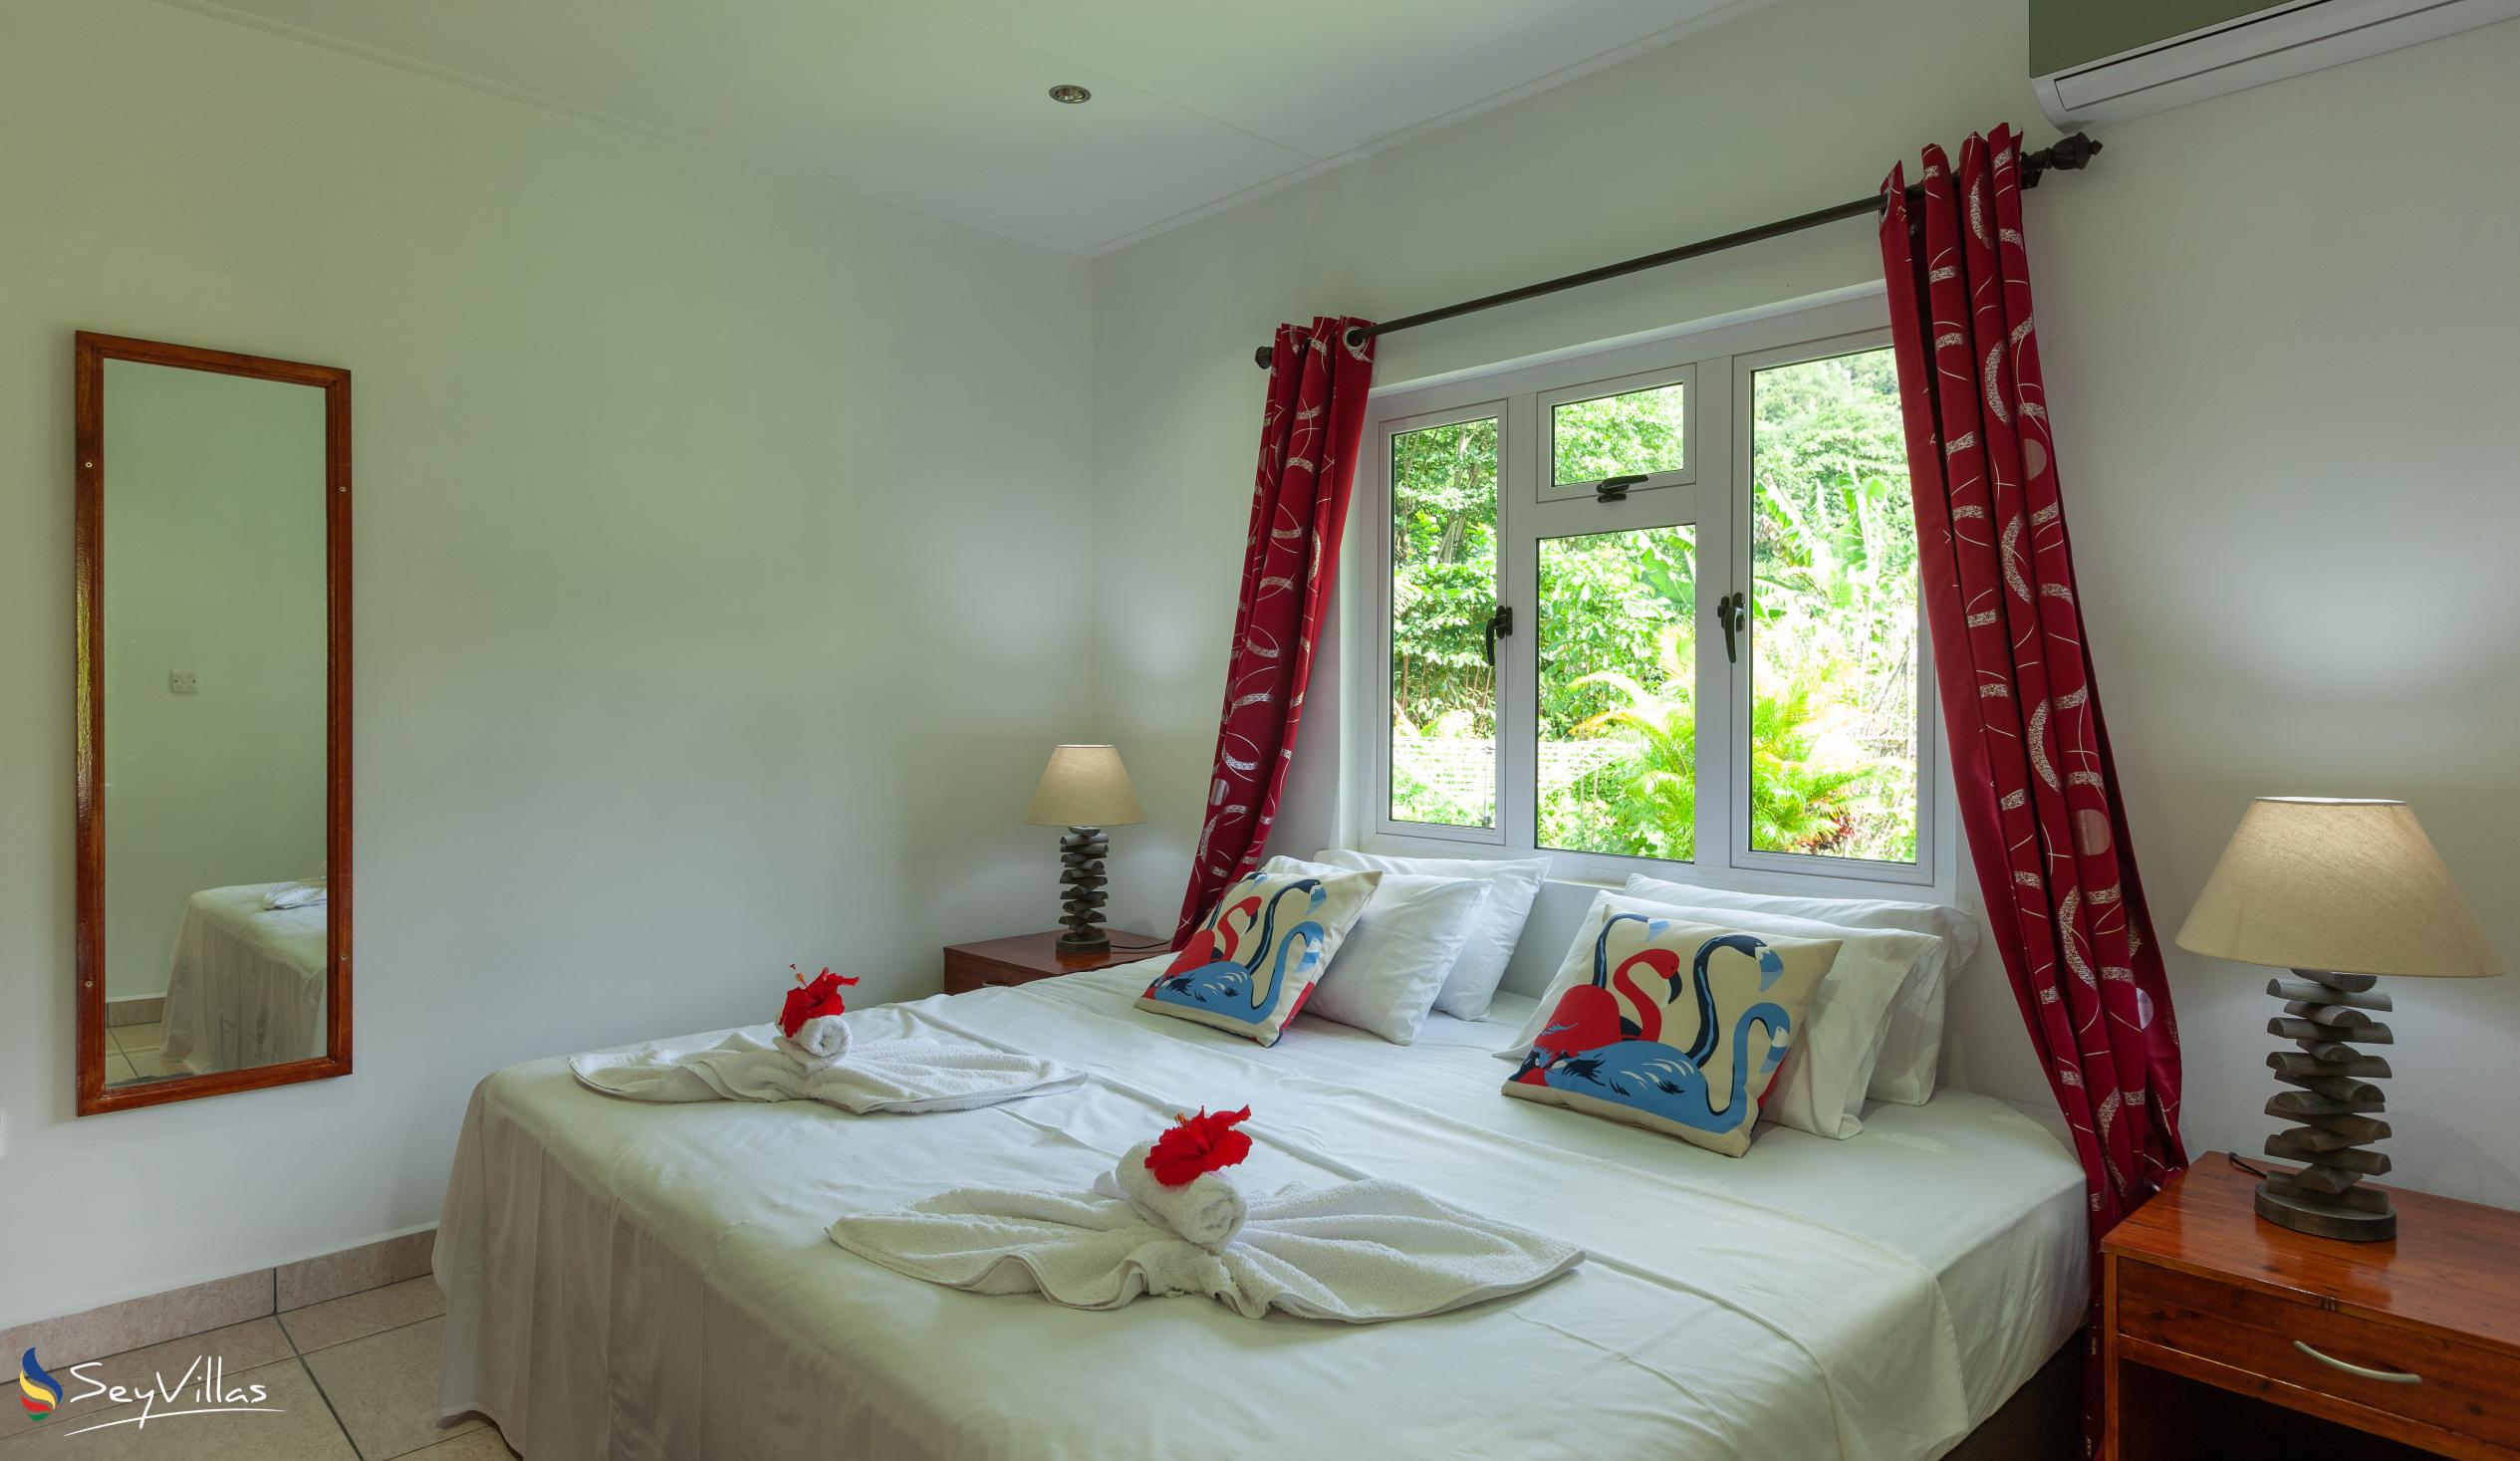 Foto 14: Destination Self-Catering - Villa con 1 camera - Praslin (Seychelles)